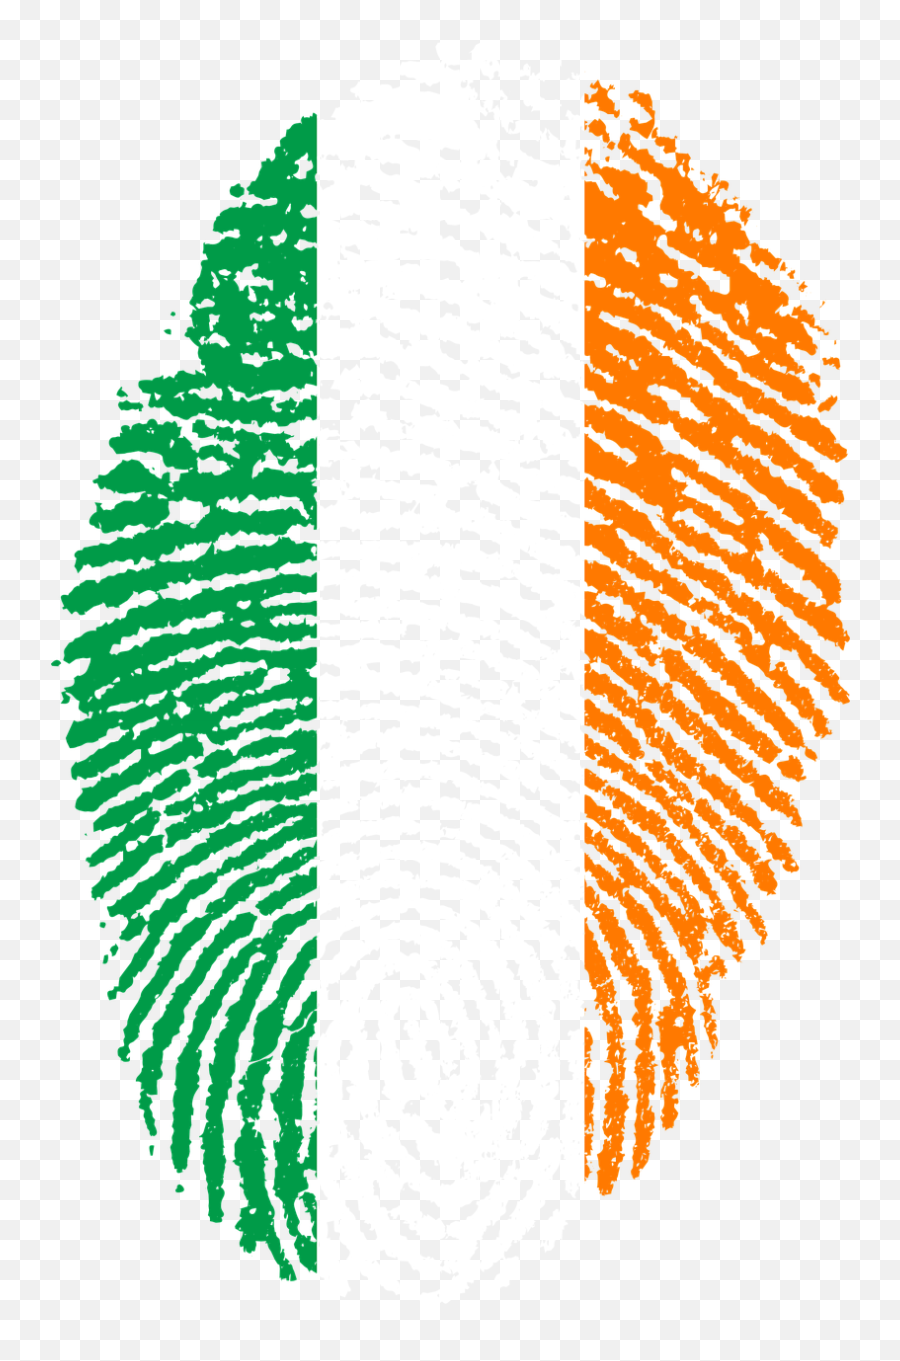 Ireland Flag Fingerprint - Ireland Flag Fingerprint Emoji,Ireland Png